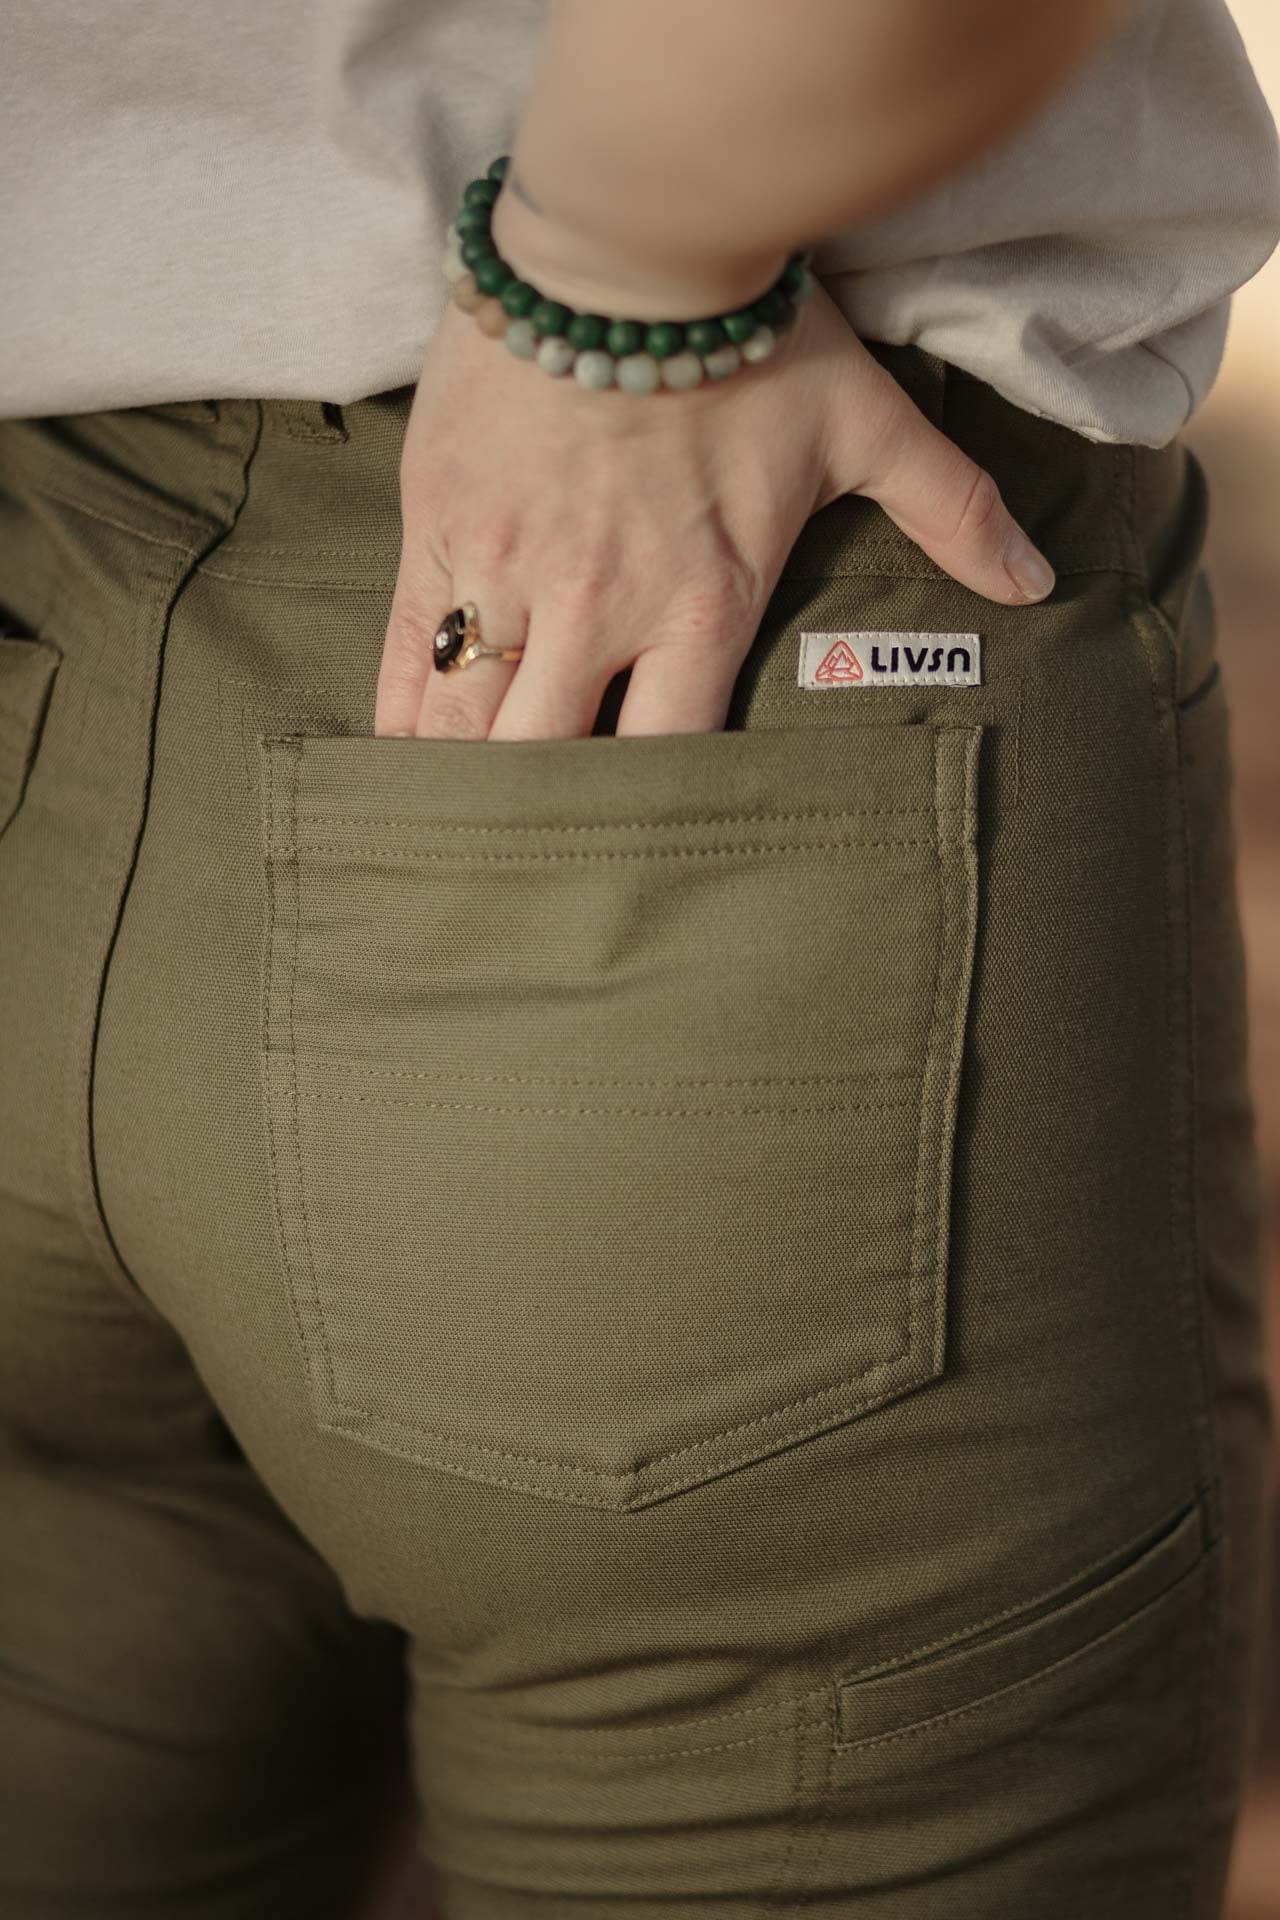 LIVSN Women's Flex Canvas Pants